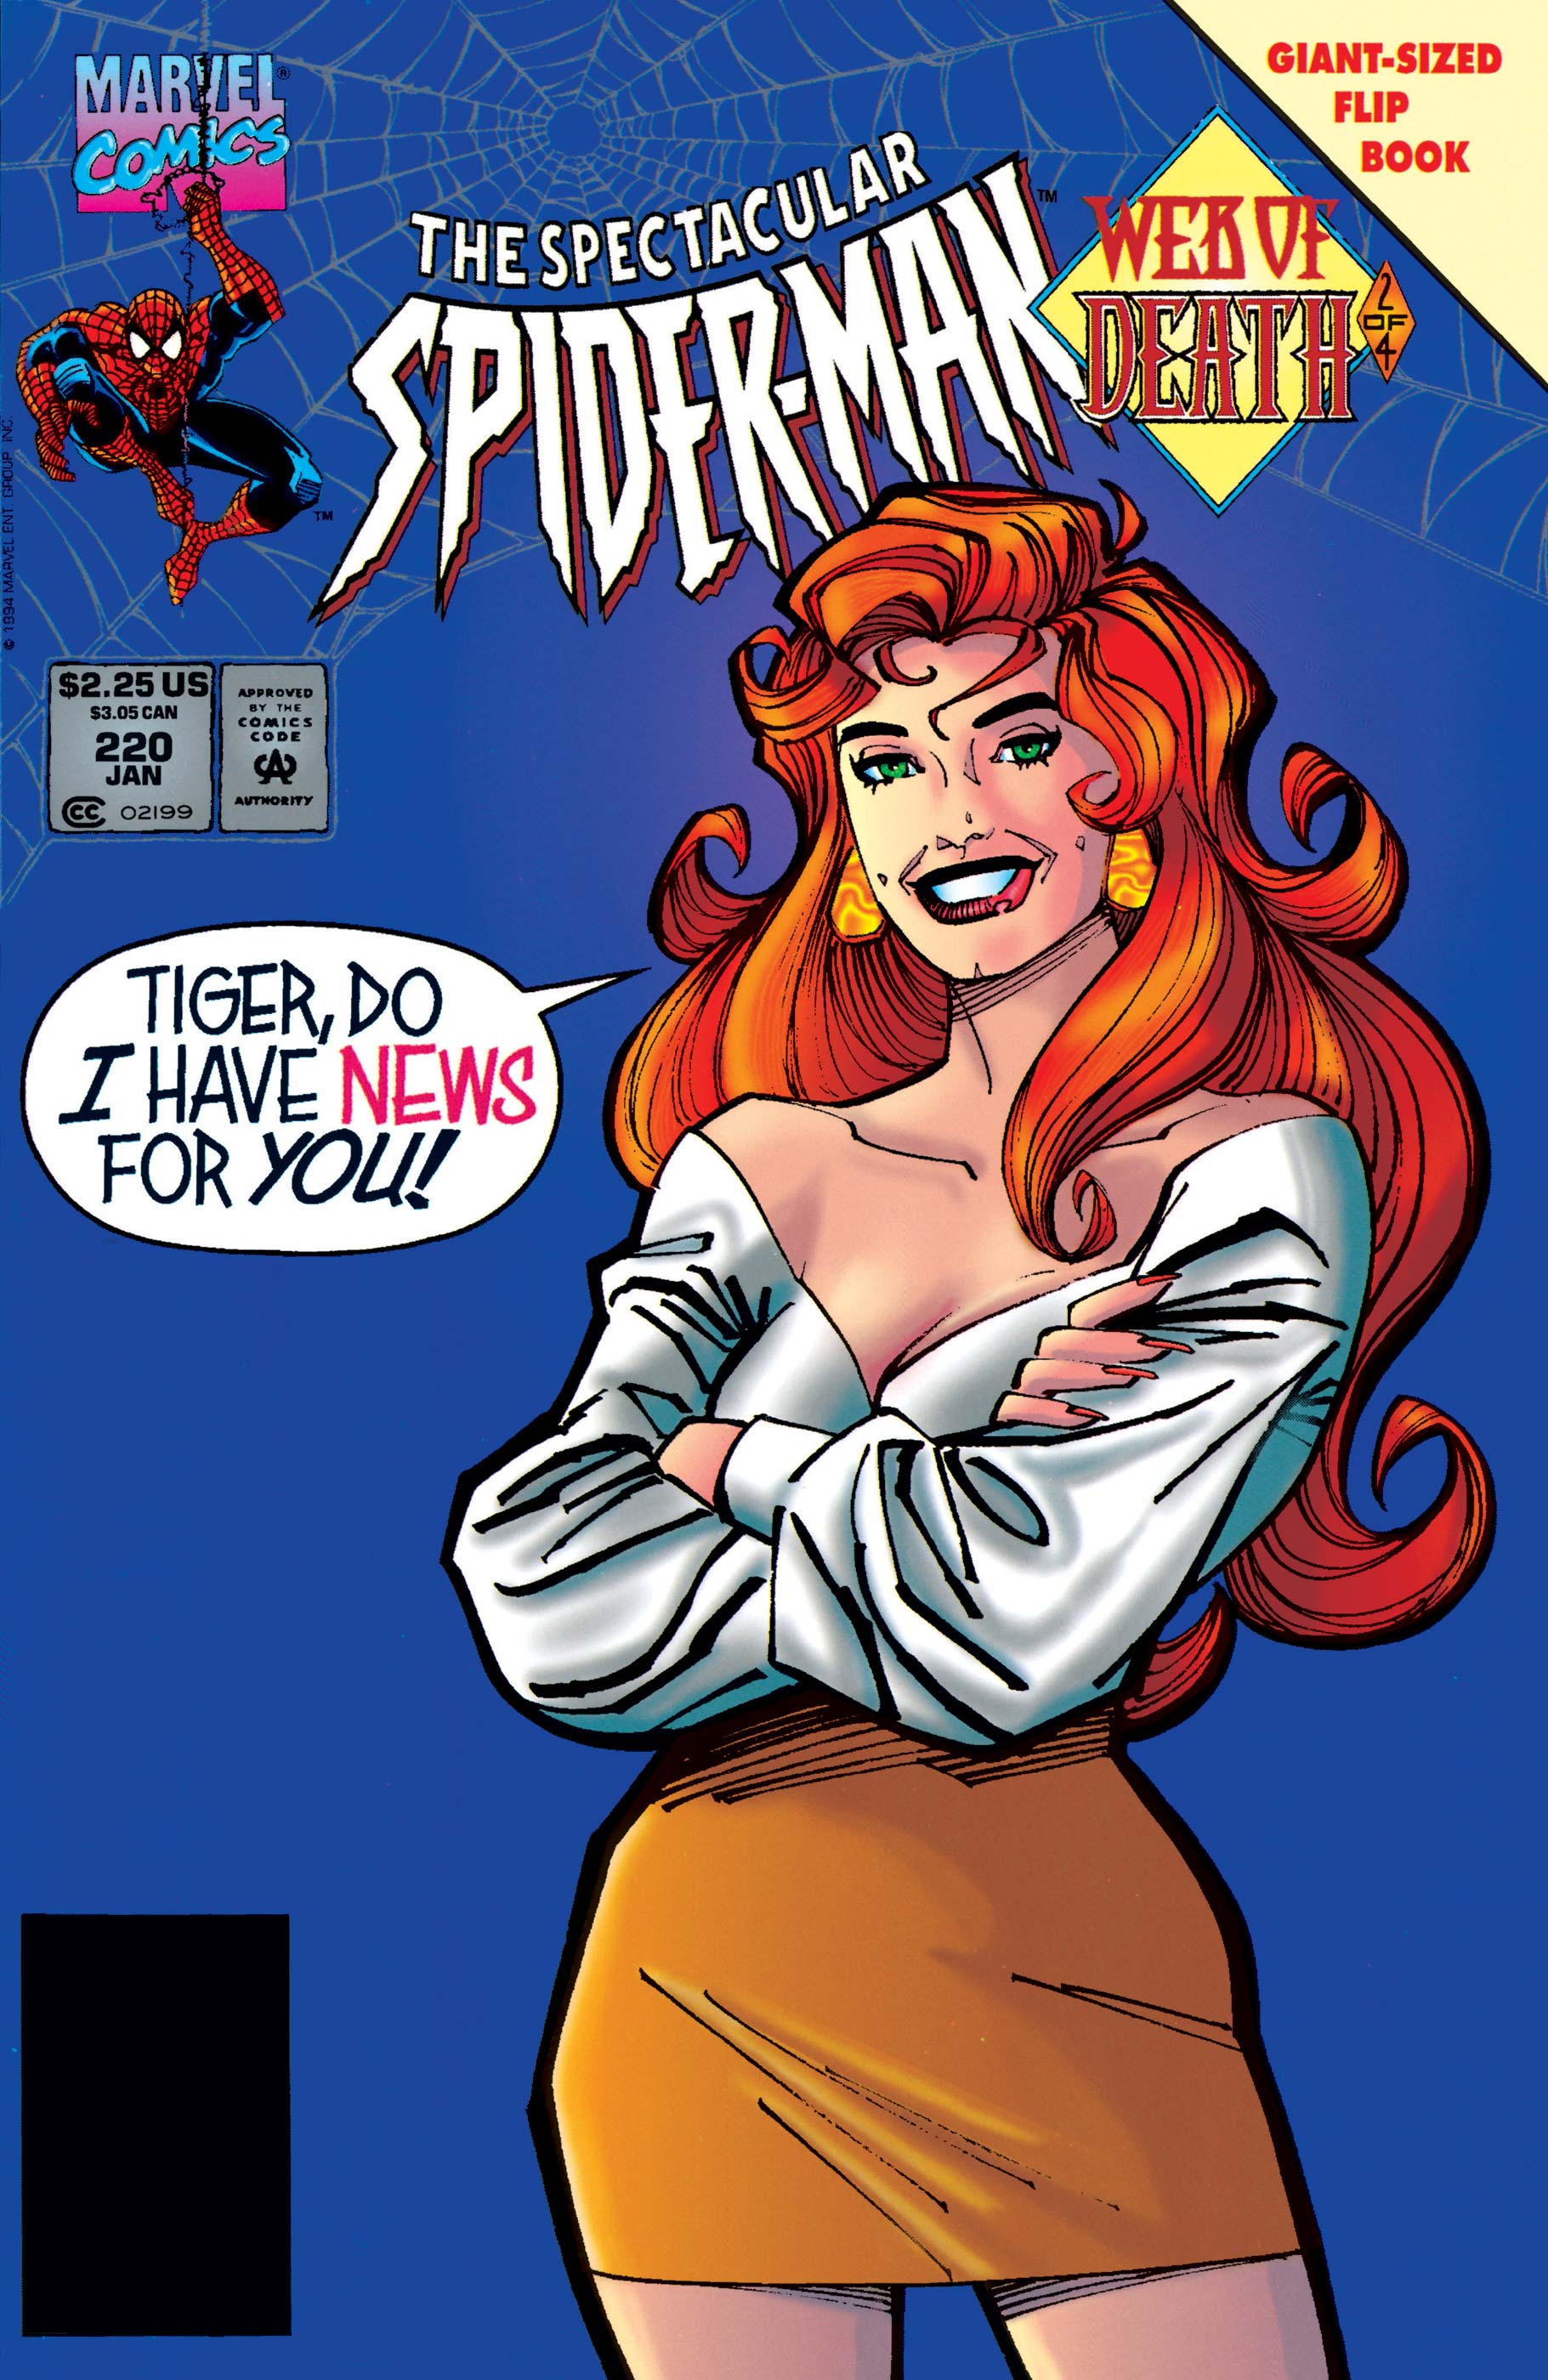 Peter Parker, the Spectacular Spider-Man (1976) #220